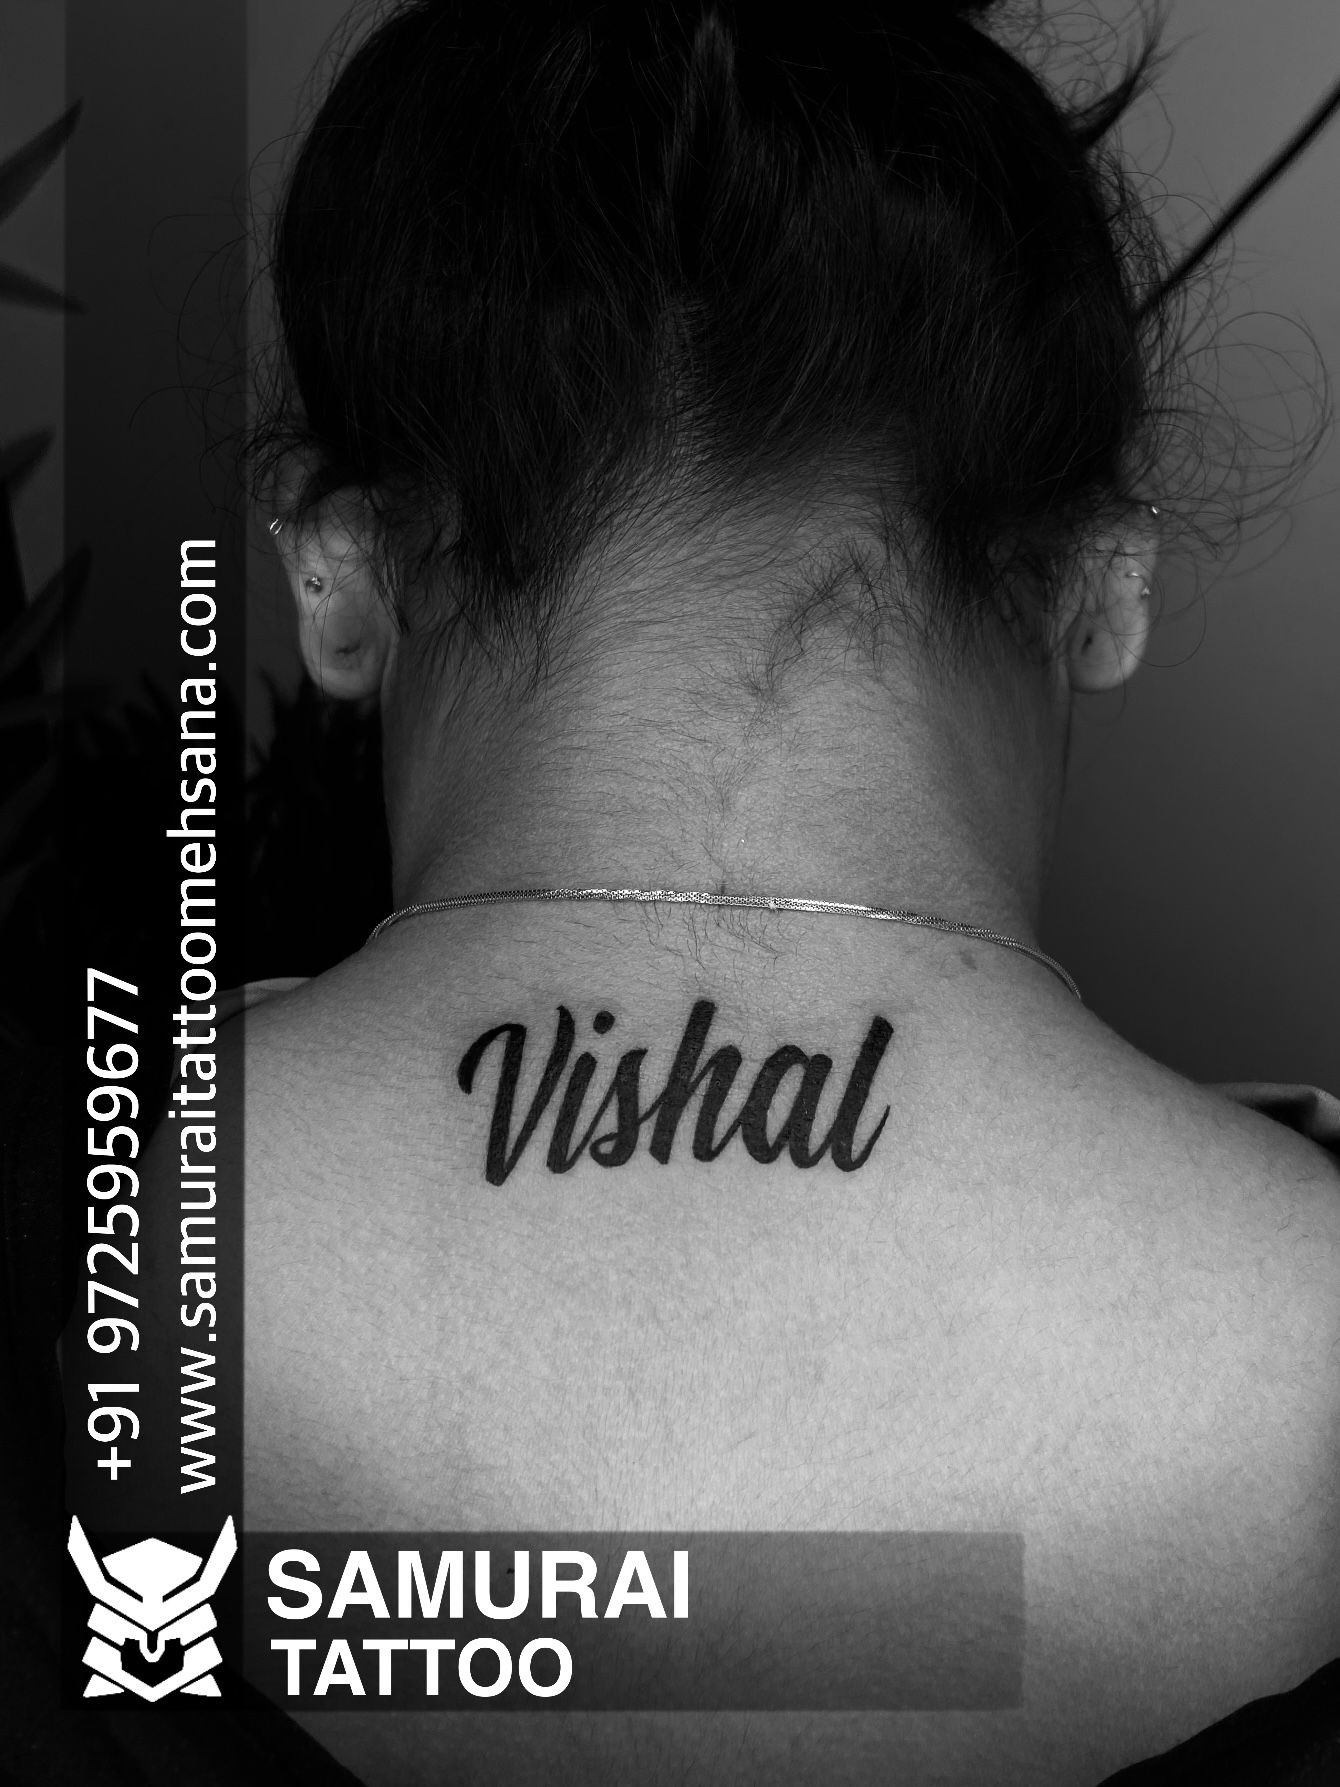 Tattoo uploaded by Geetha Dc • Infinity tattoos • Tattoodo